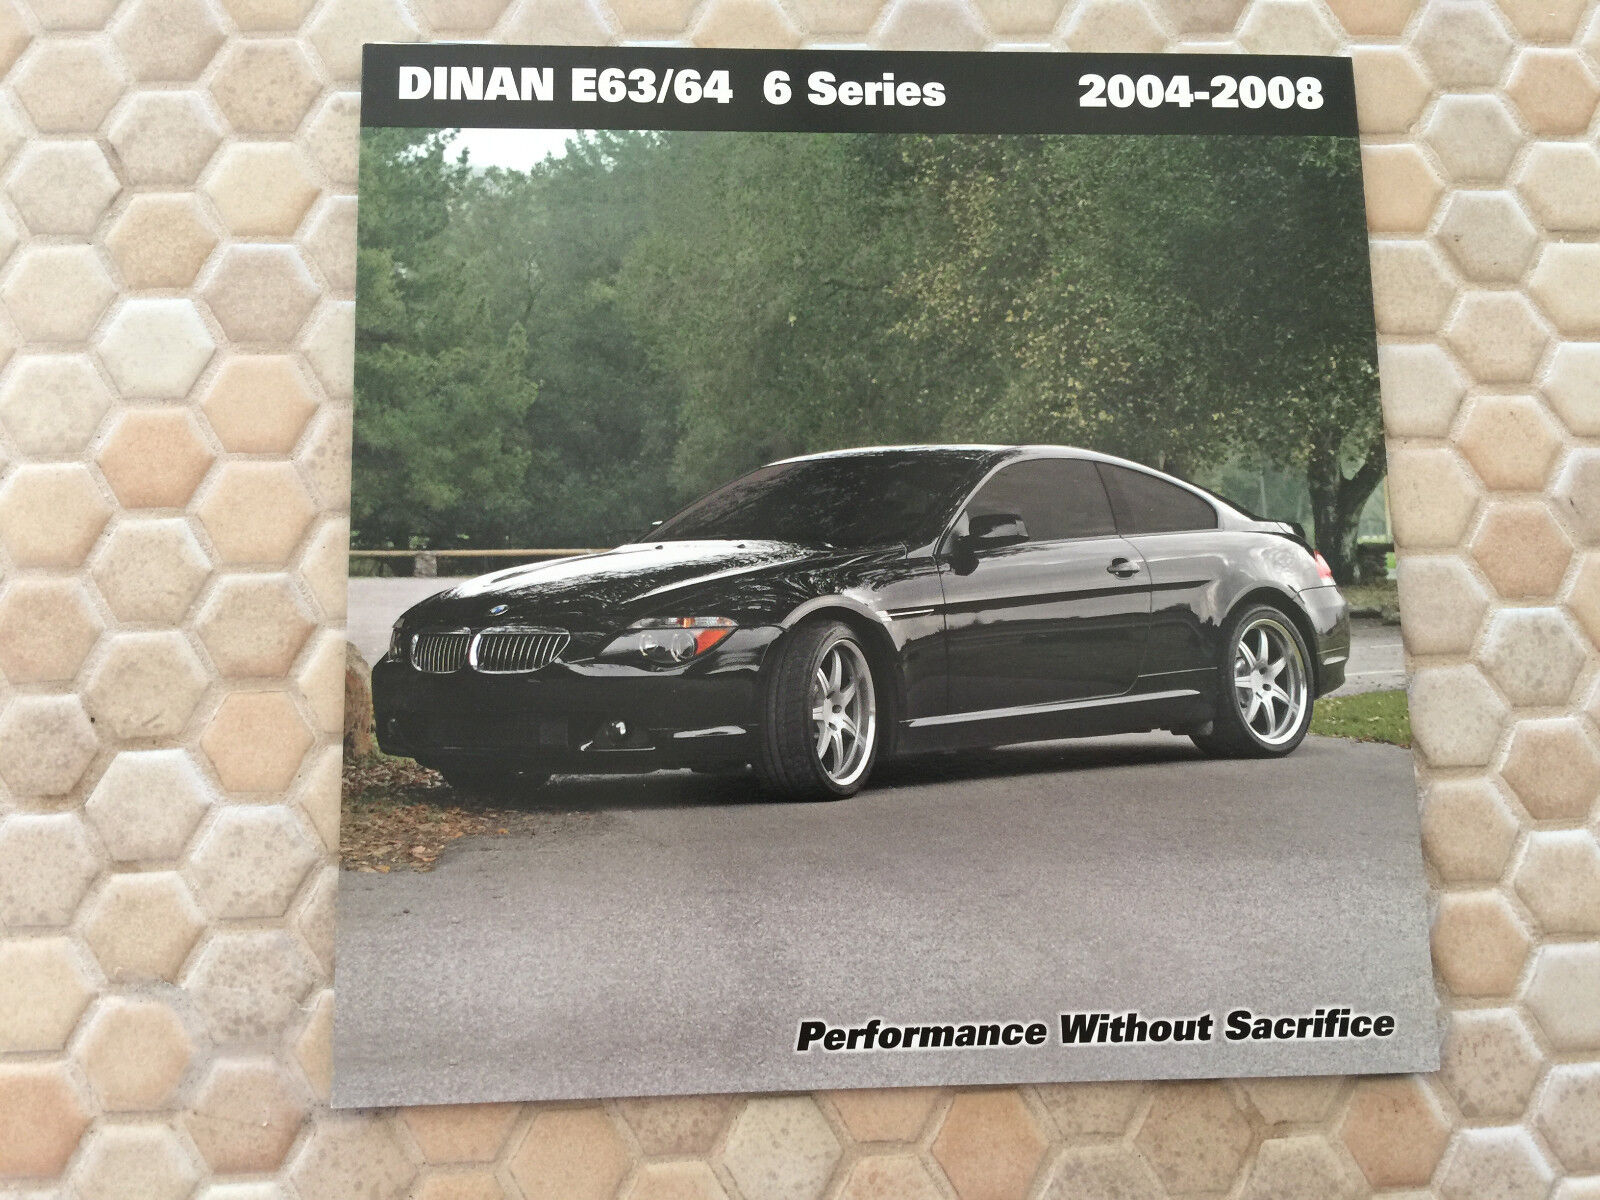 BMW DINAN E63 E64 6 SERIES PERFORMANCE UPGRADE BROCHURE 2004 - 2008 USA EDITION